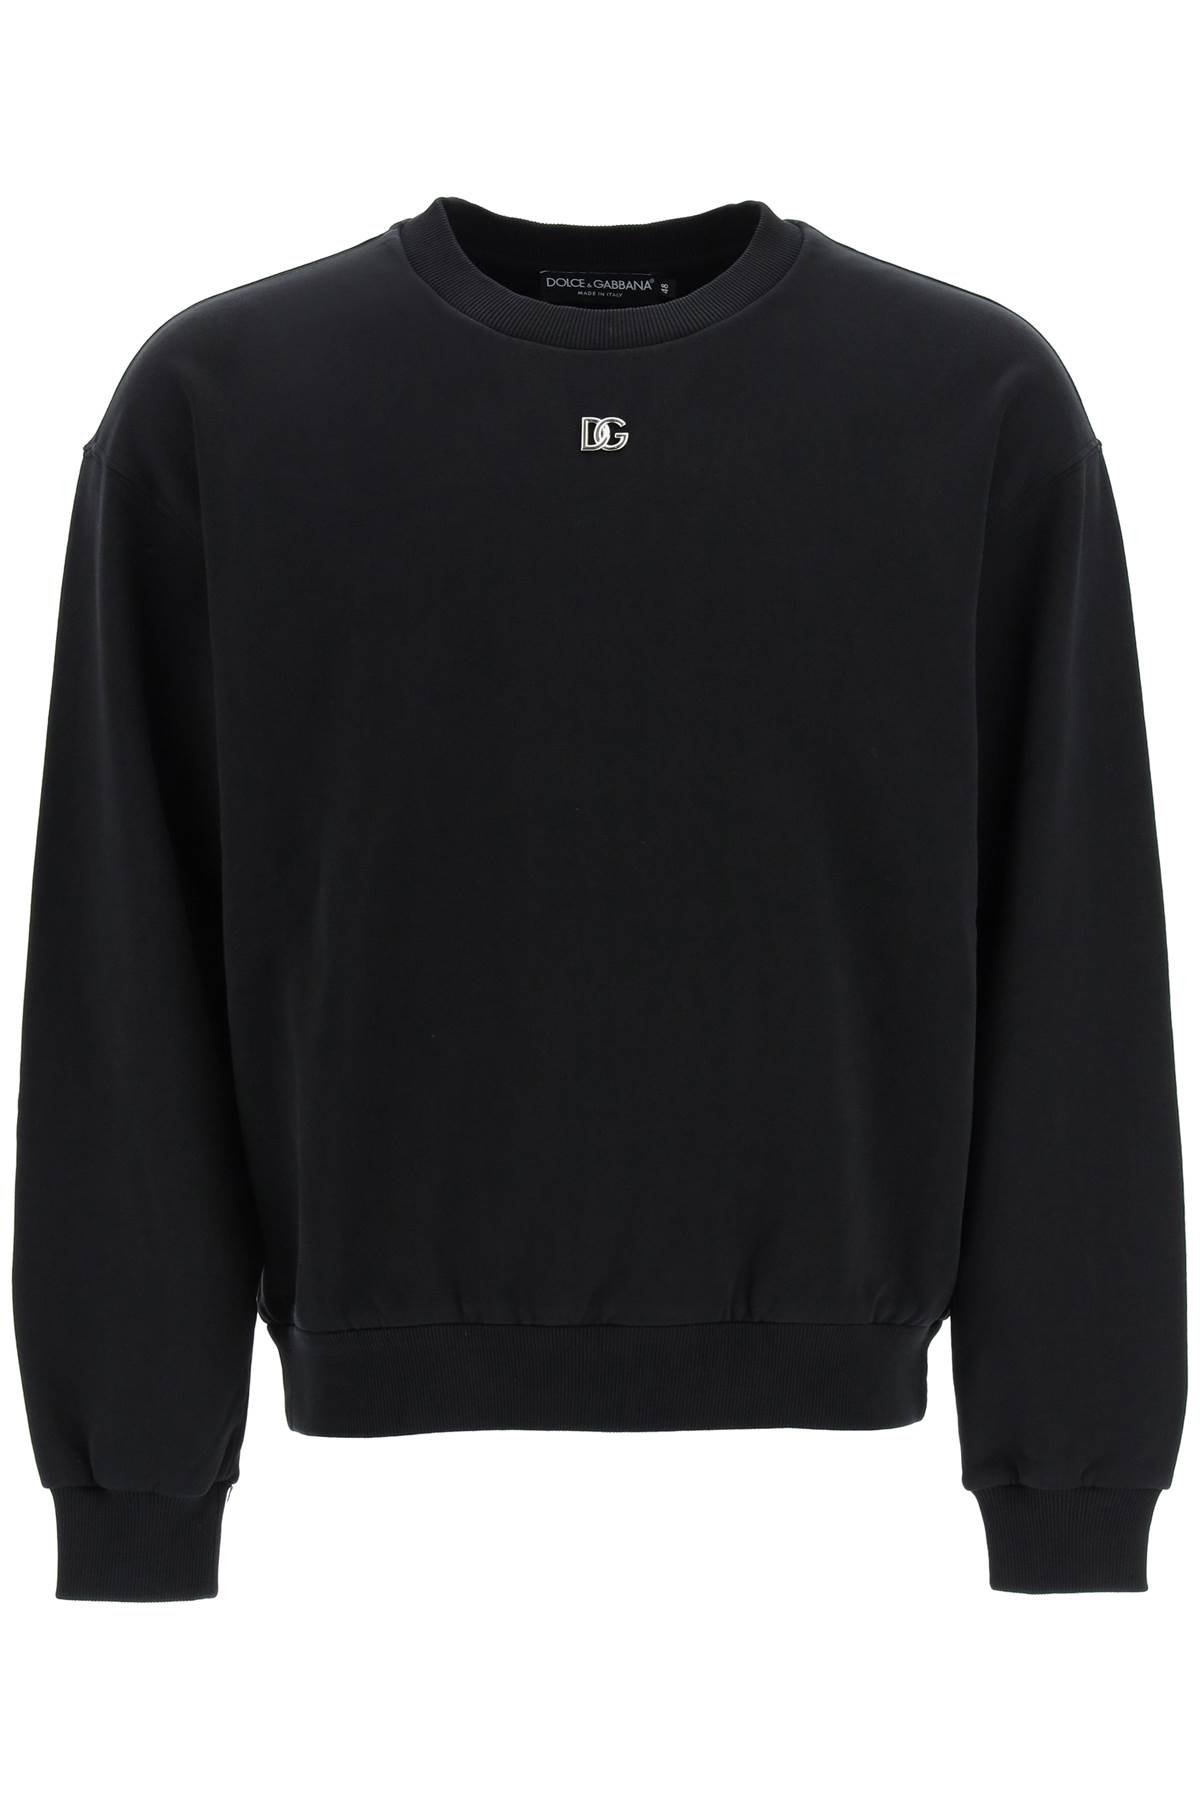 Dolce & Gabbana Sweatshirt With Logo Application